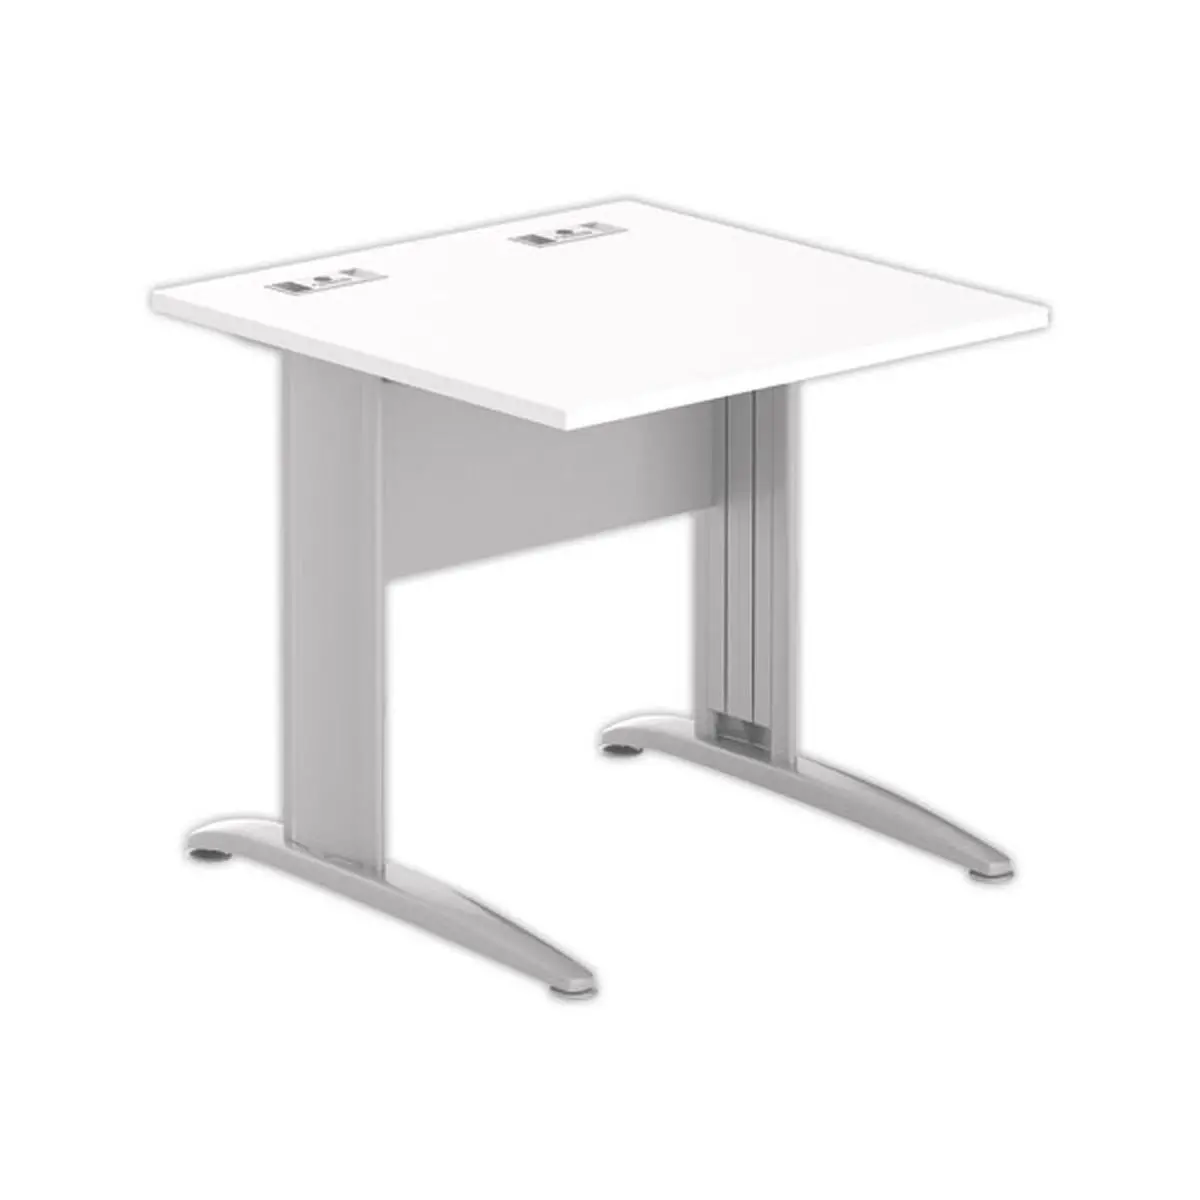 Table 80 x 80 blanc - pieds aluminium photo du produit